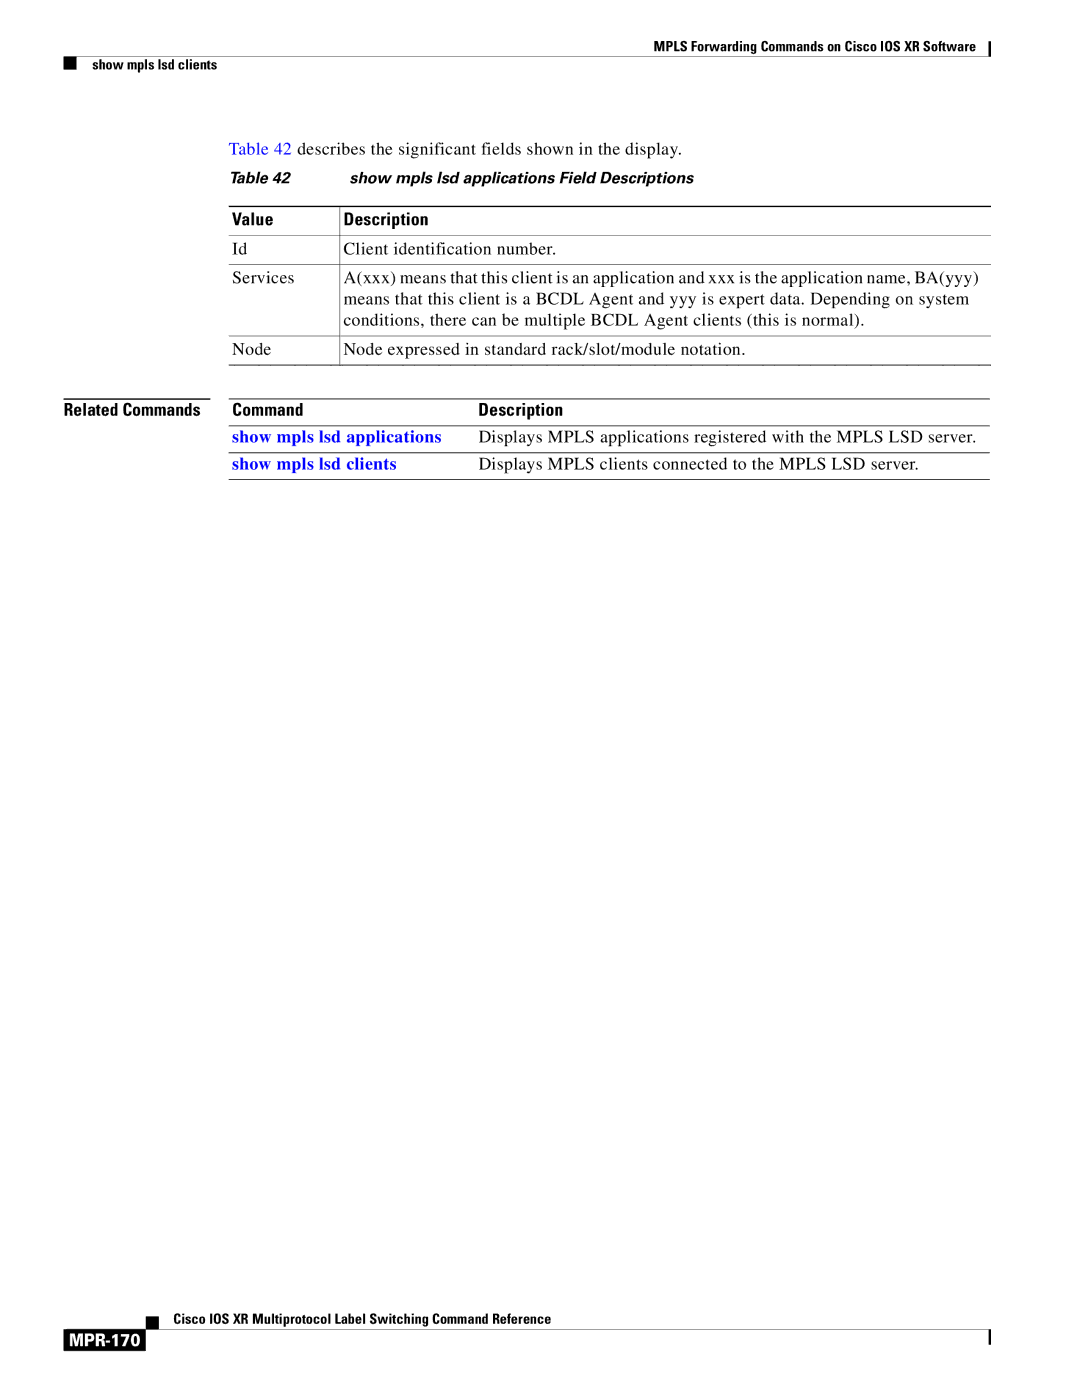 Cisco Systems MPR-151 manual MPR-170 